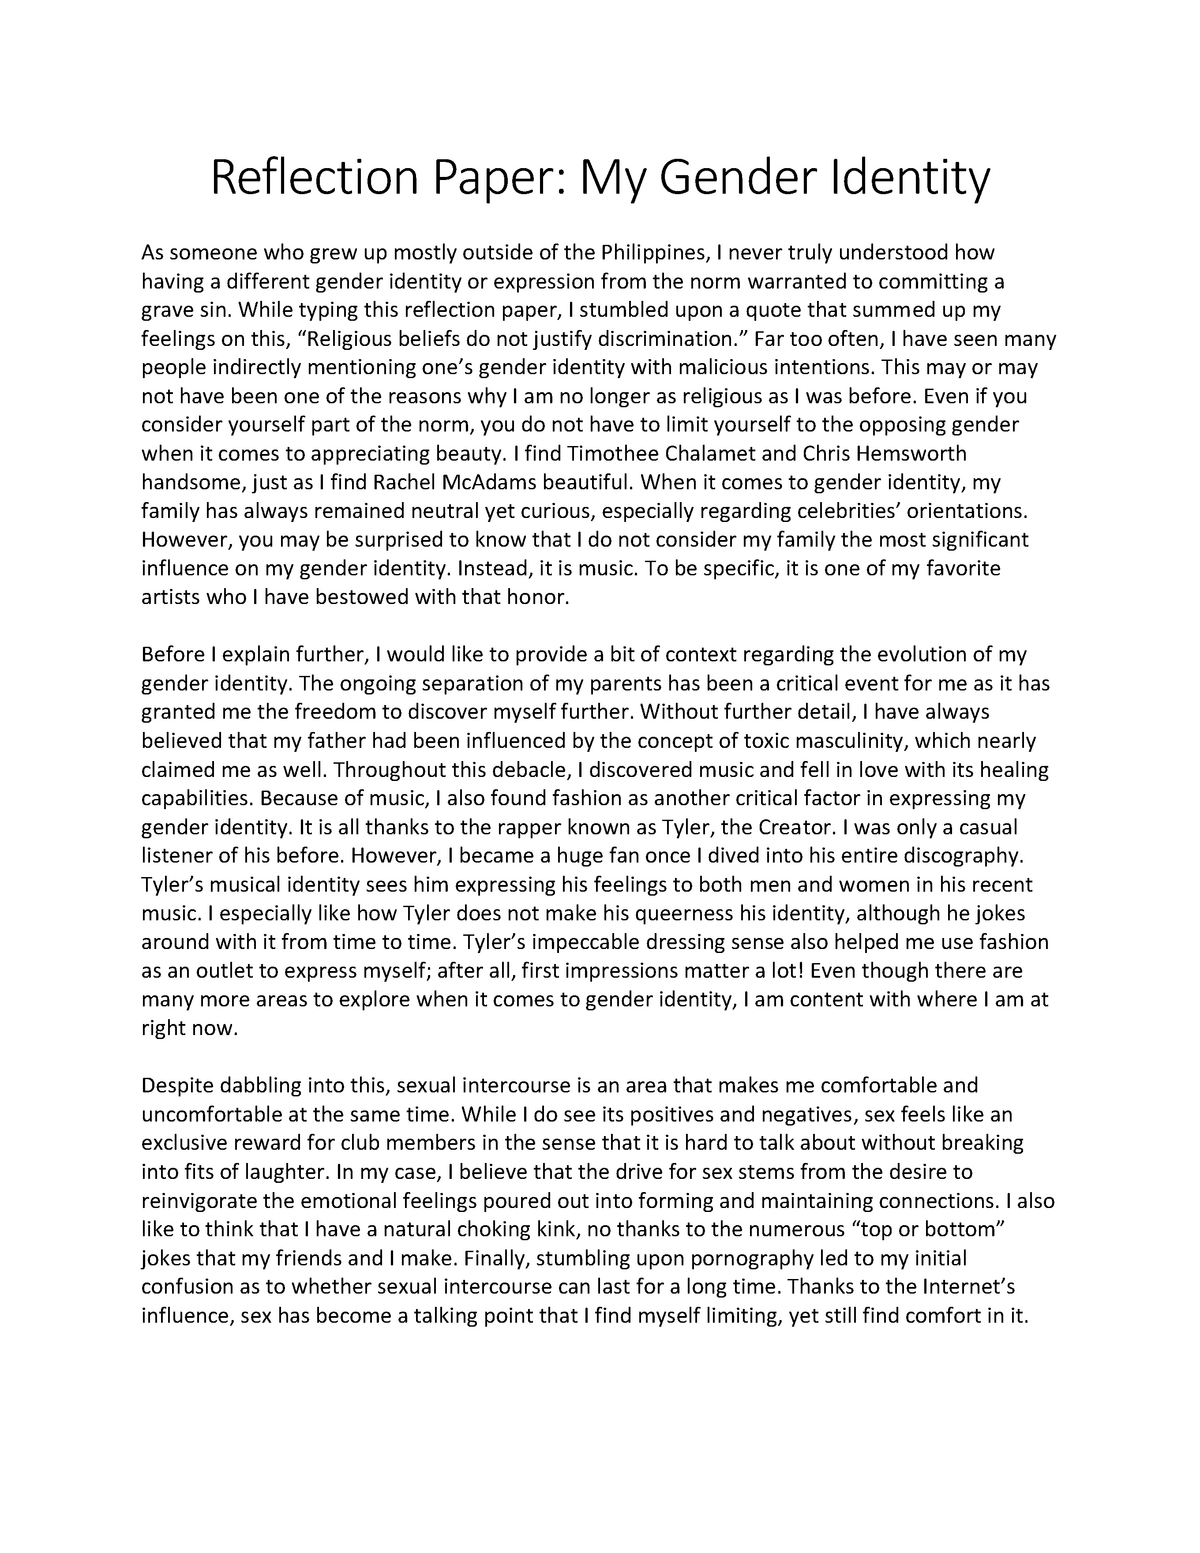 personal identity reflection essay